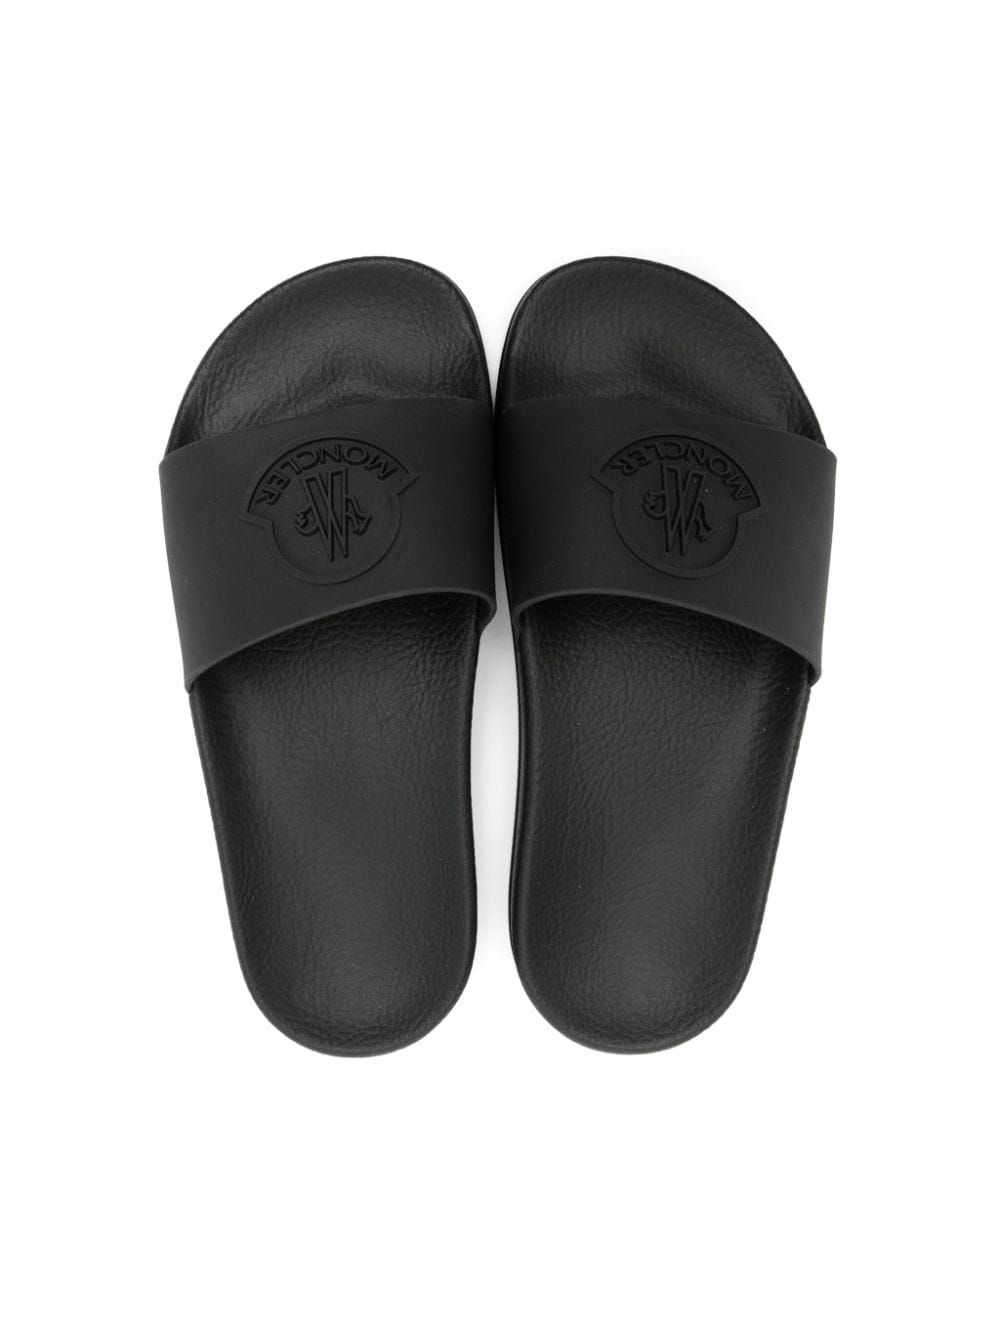 Black children's slippers with logo